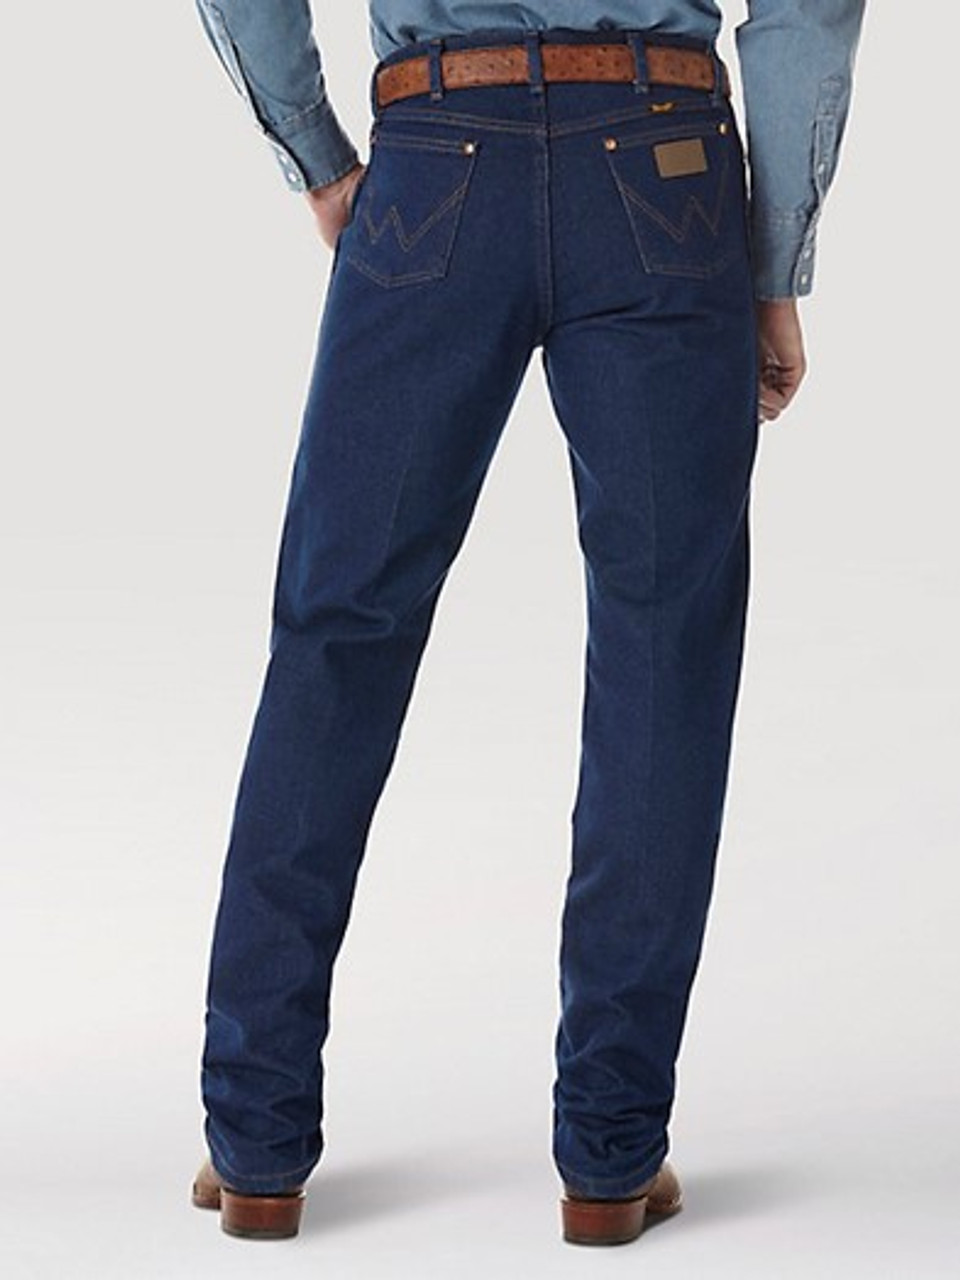 Wrangler Men's 13MWZ Cowboy Cut Original Fit Prewashed Jeans